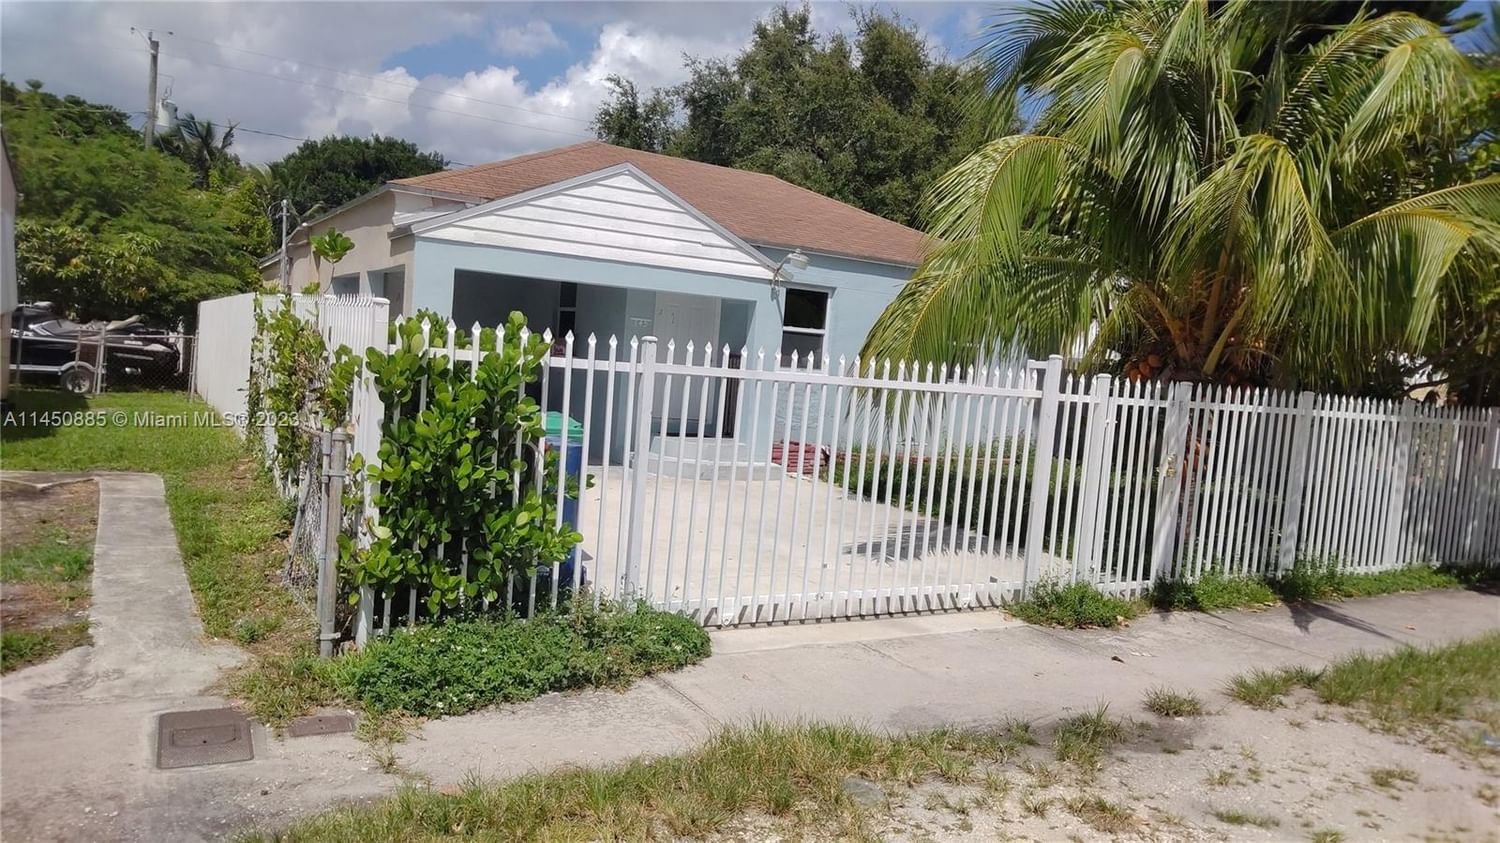 Real estate property located at 845 77th St, Miami-Dade County, Miami, FL